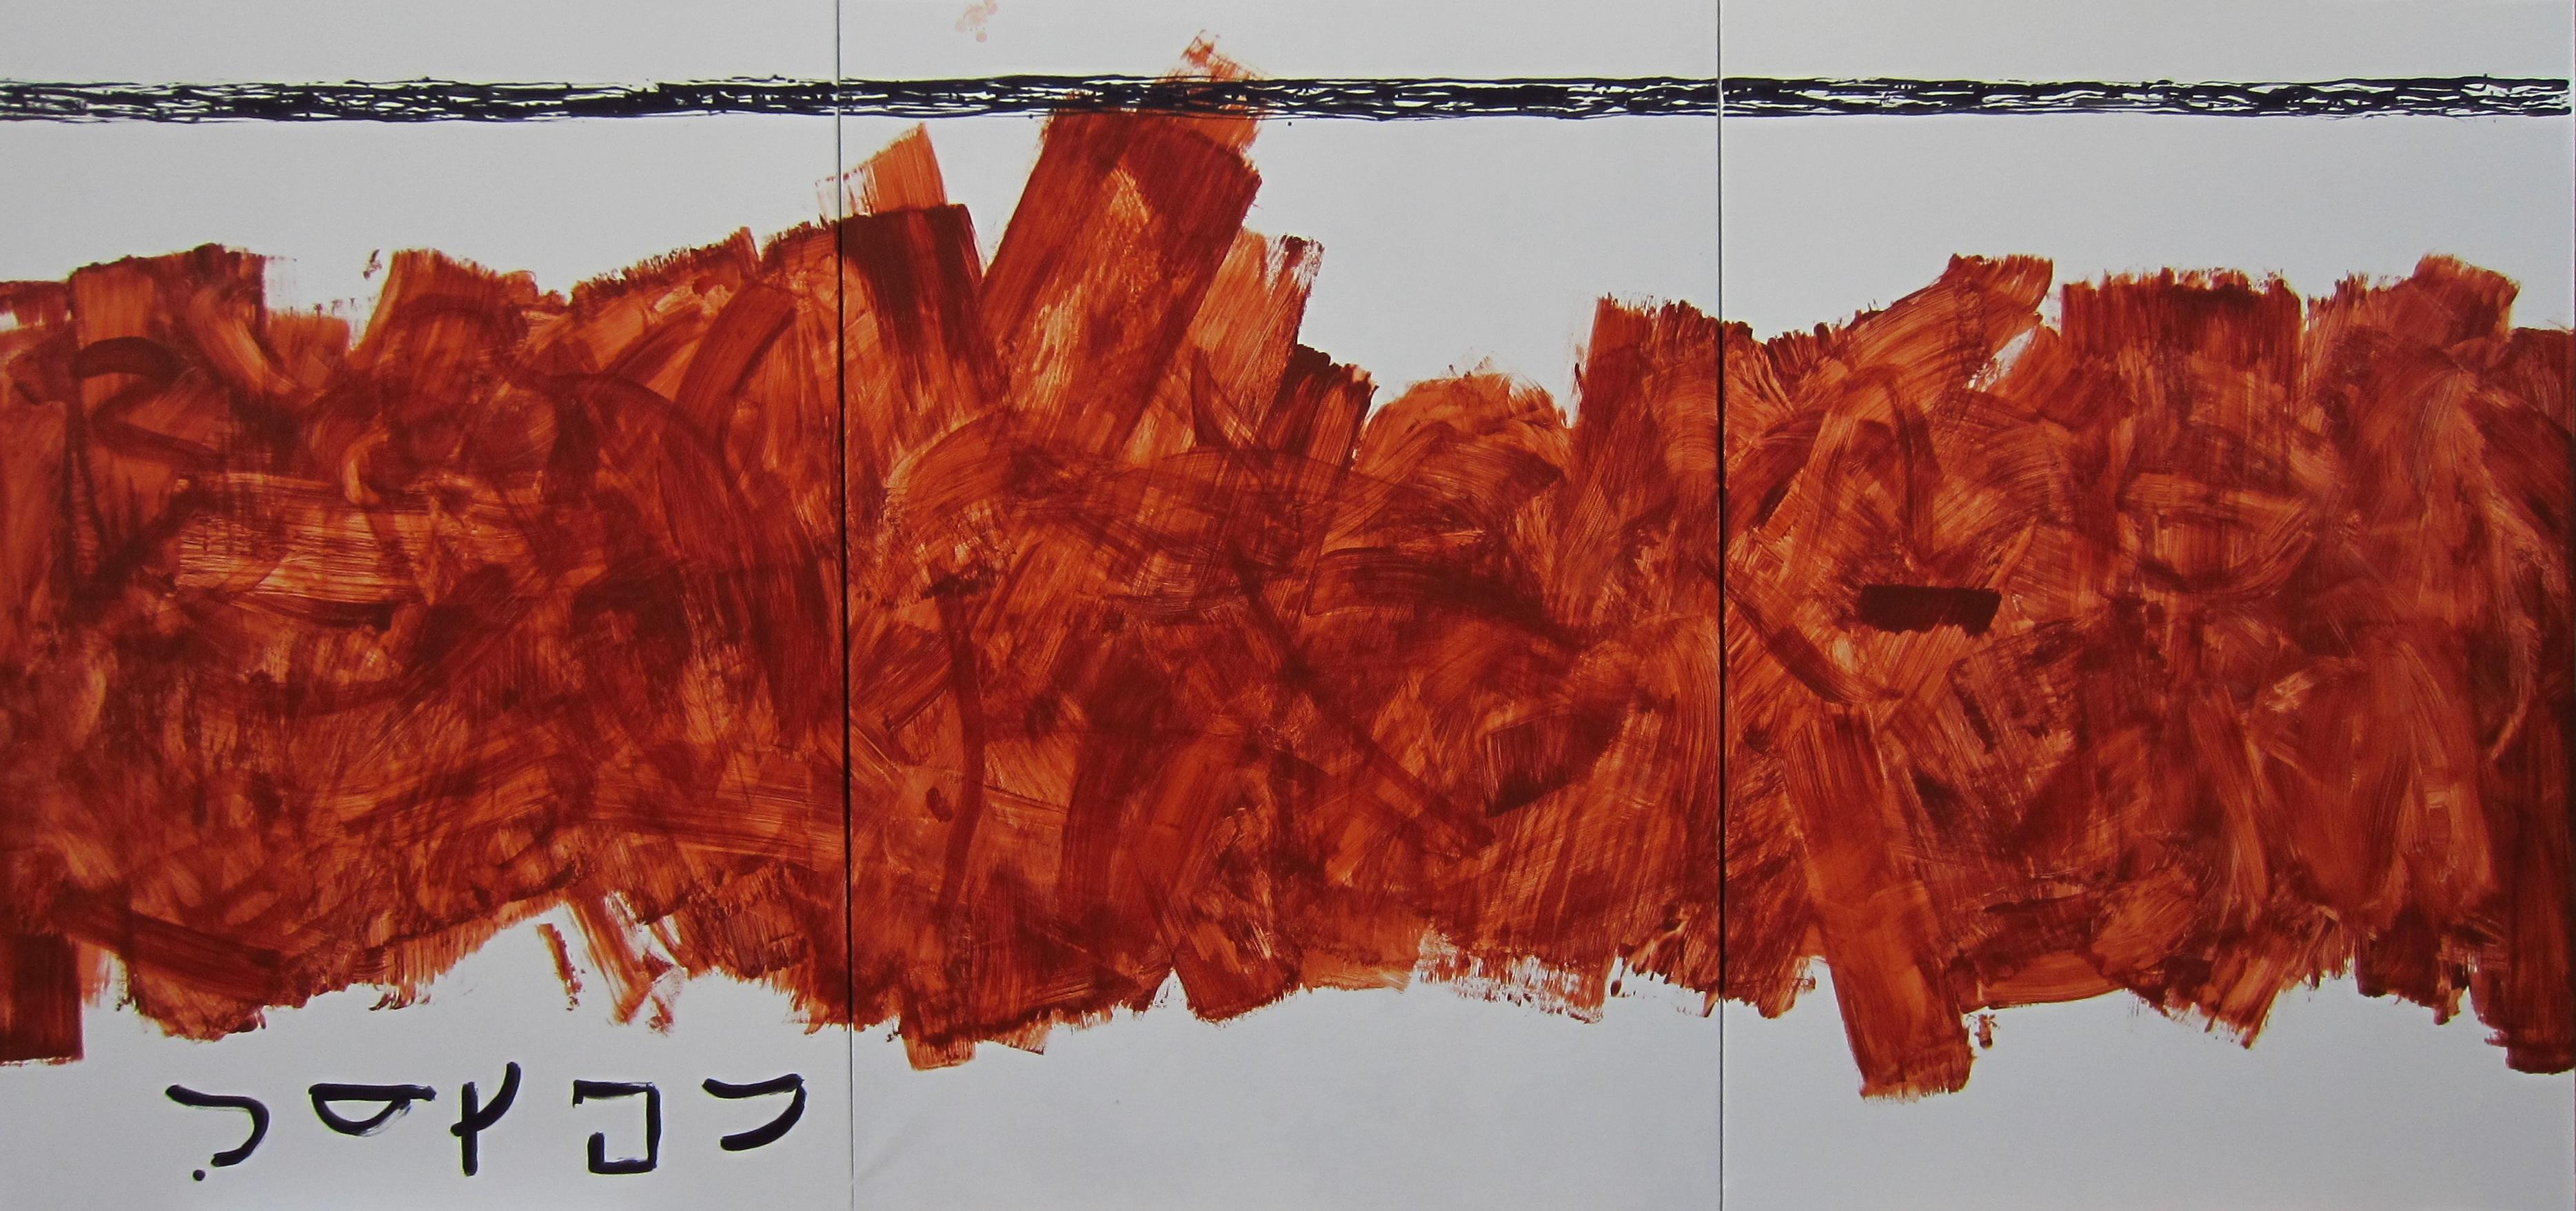 RAFAEL RUZ Abstract Painting -  Ruz  Red  Orange    Very Big. TRIPTYCH  original acrylic on canvas. abstract.